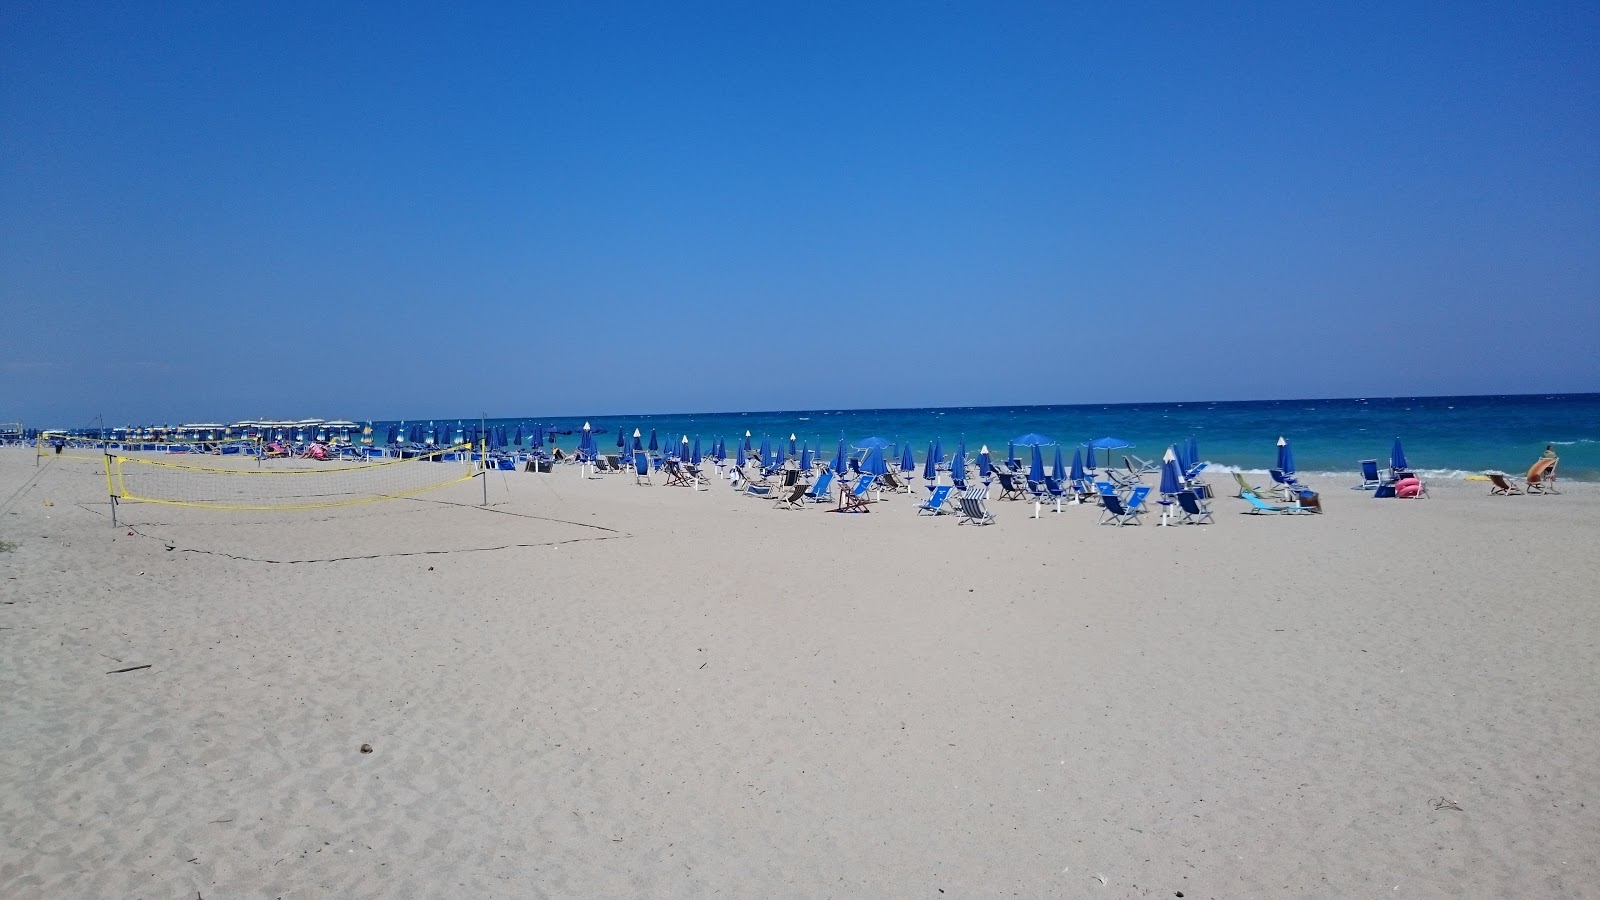 Fotografie cu Campomarzio beach cu nivelul de curățenie in medie